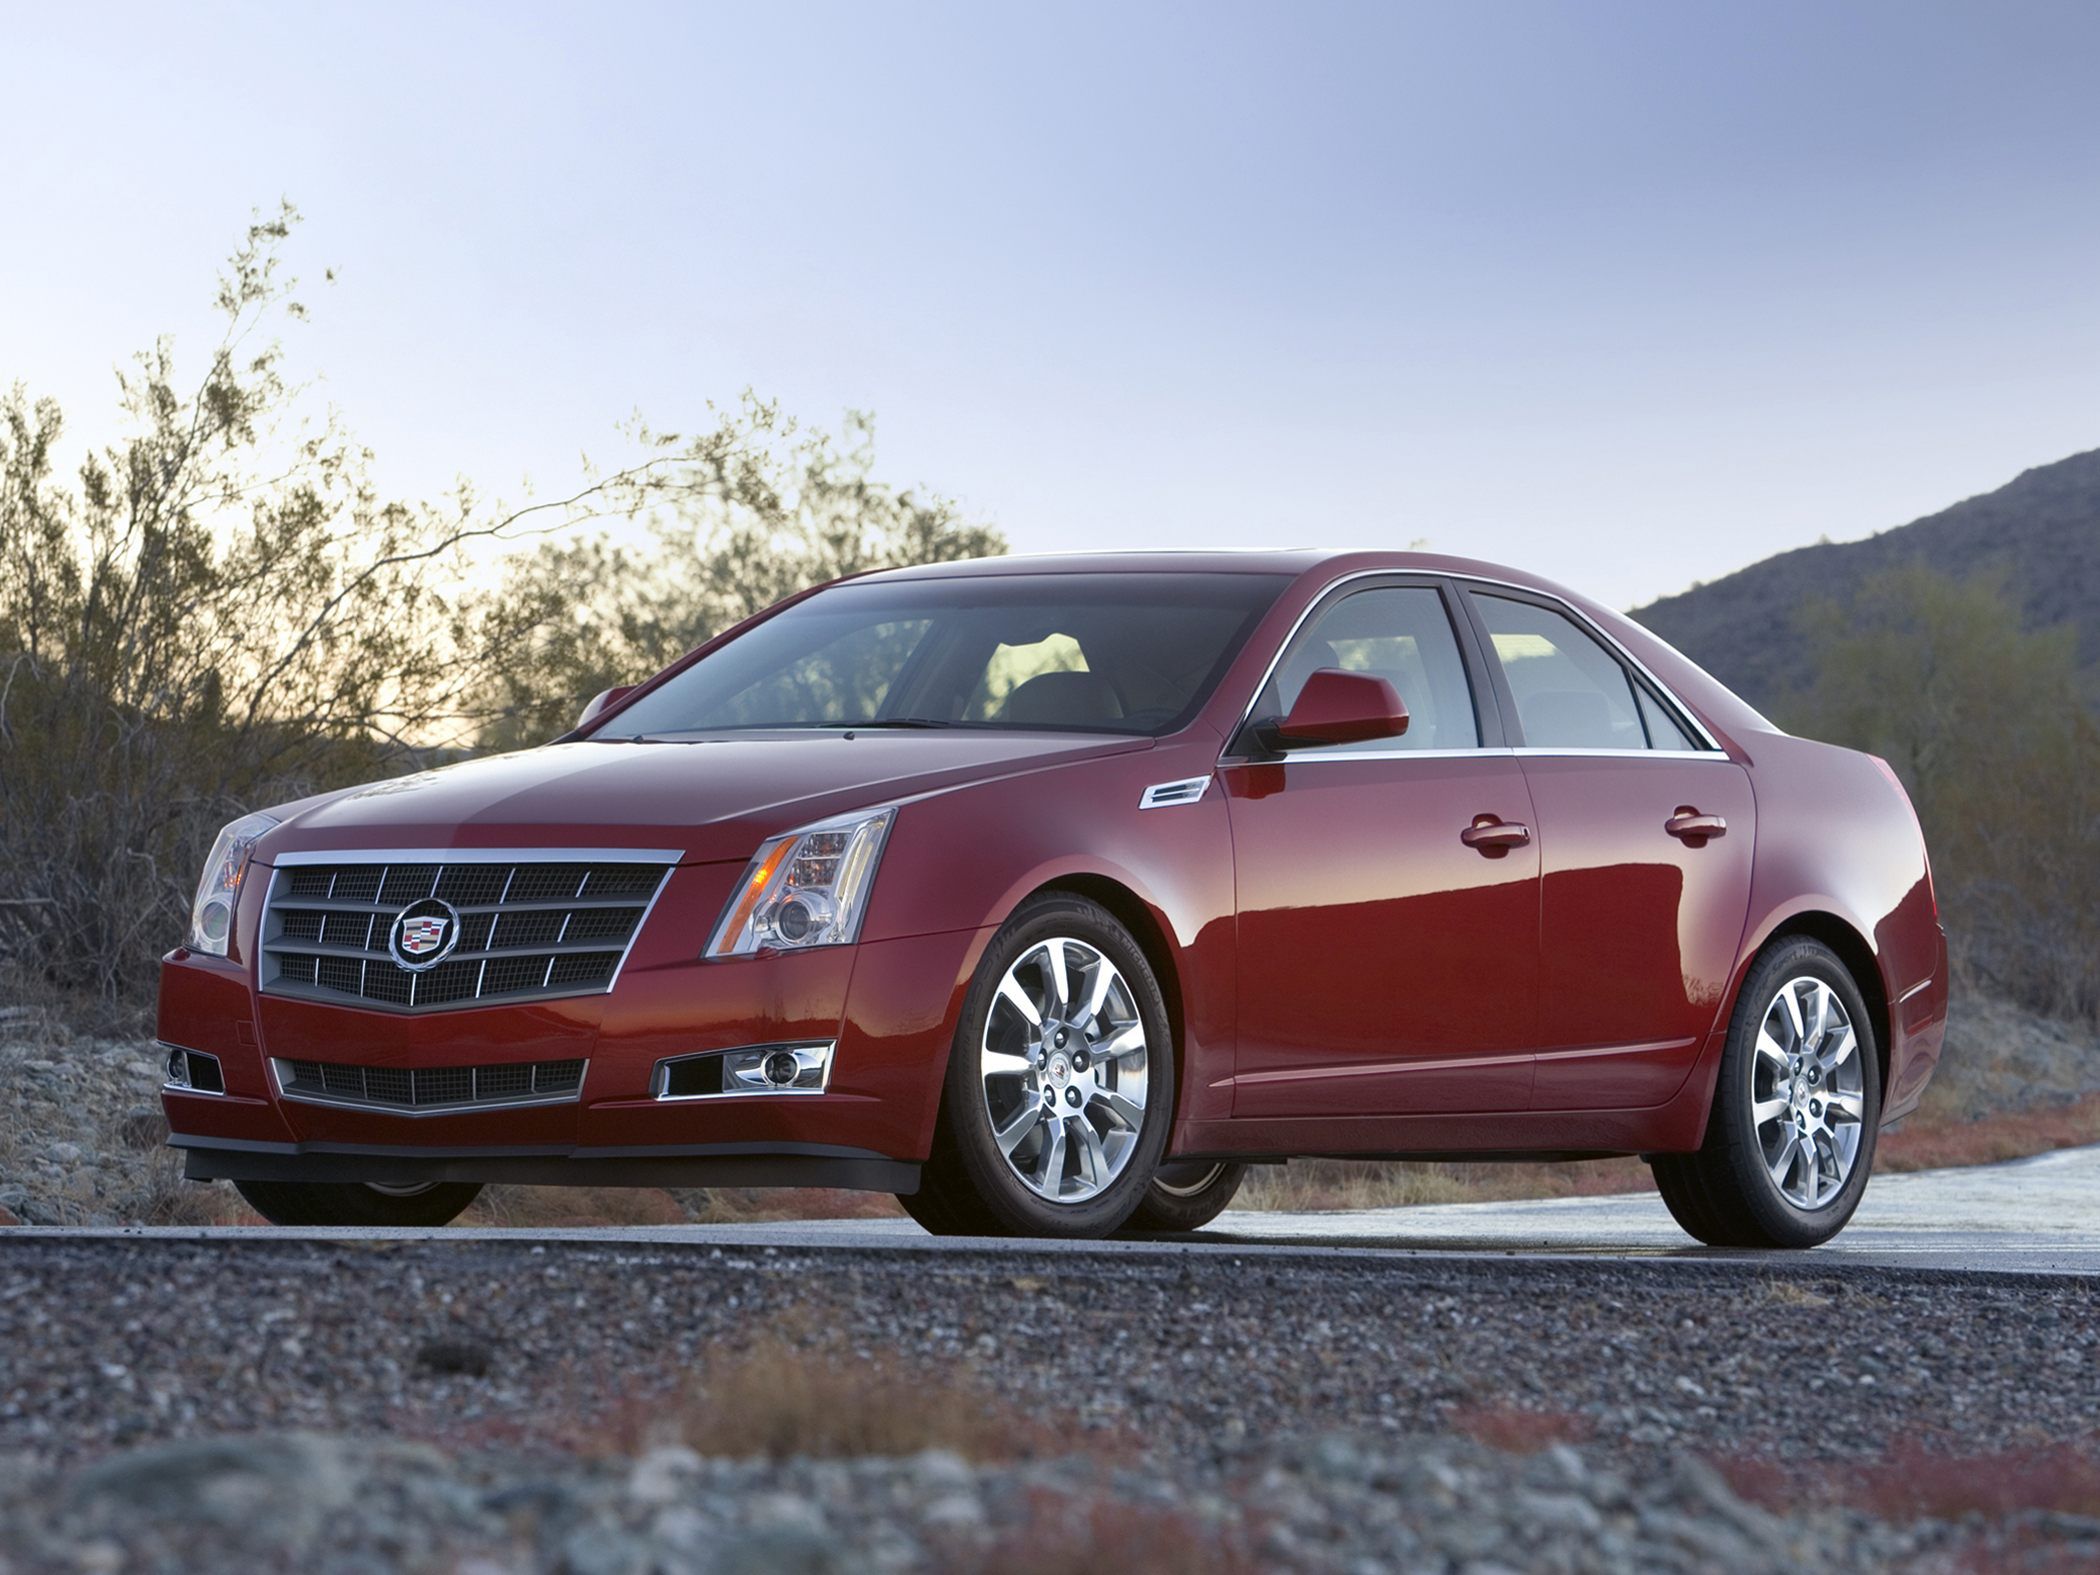 2012-Cadillac-CTS-Sedan-Base-4dr-Rear-wheel-Drive-Sedan-Exterior